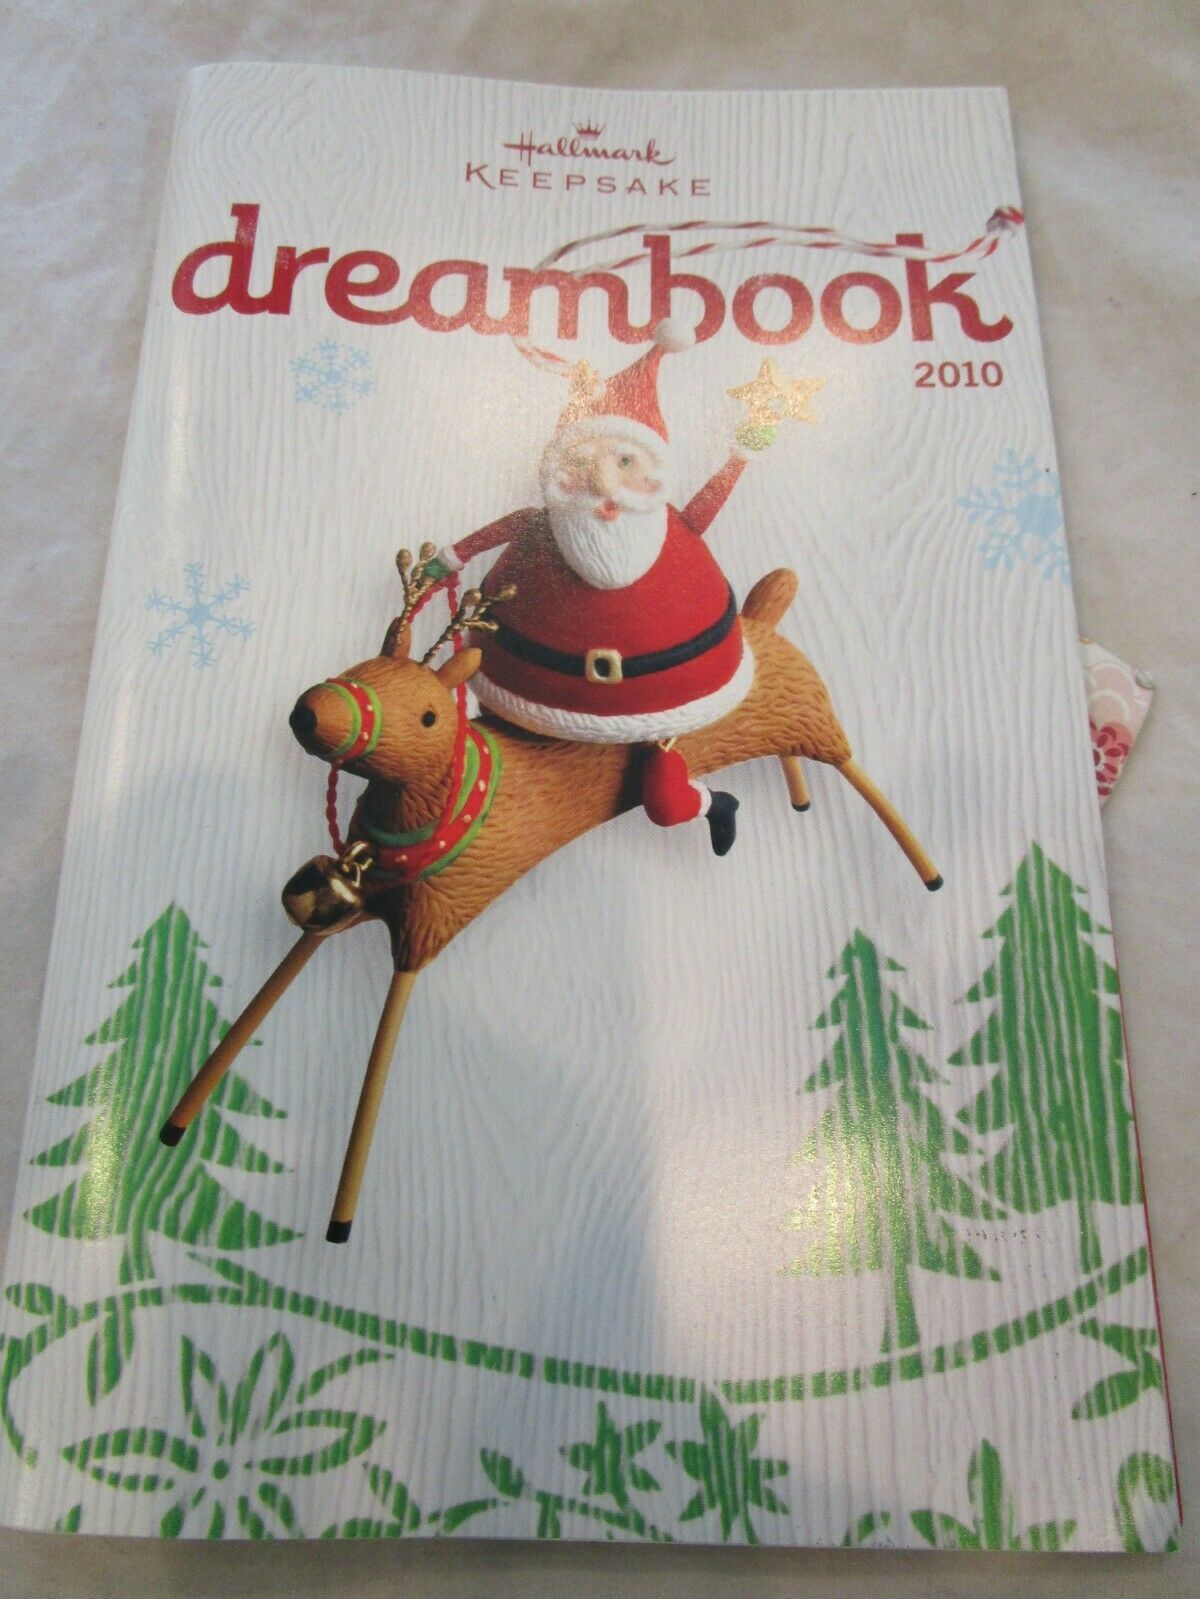 Hallmark Keepsake Dream Book Dreambook Look Book 2010 Brand New - $9.99